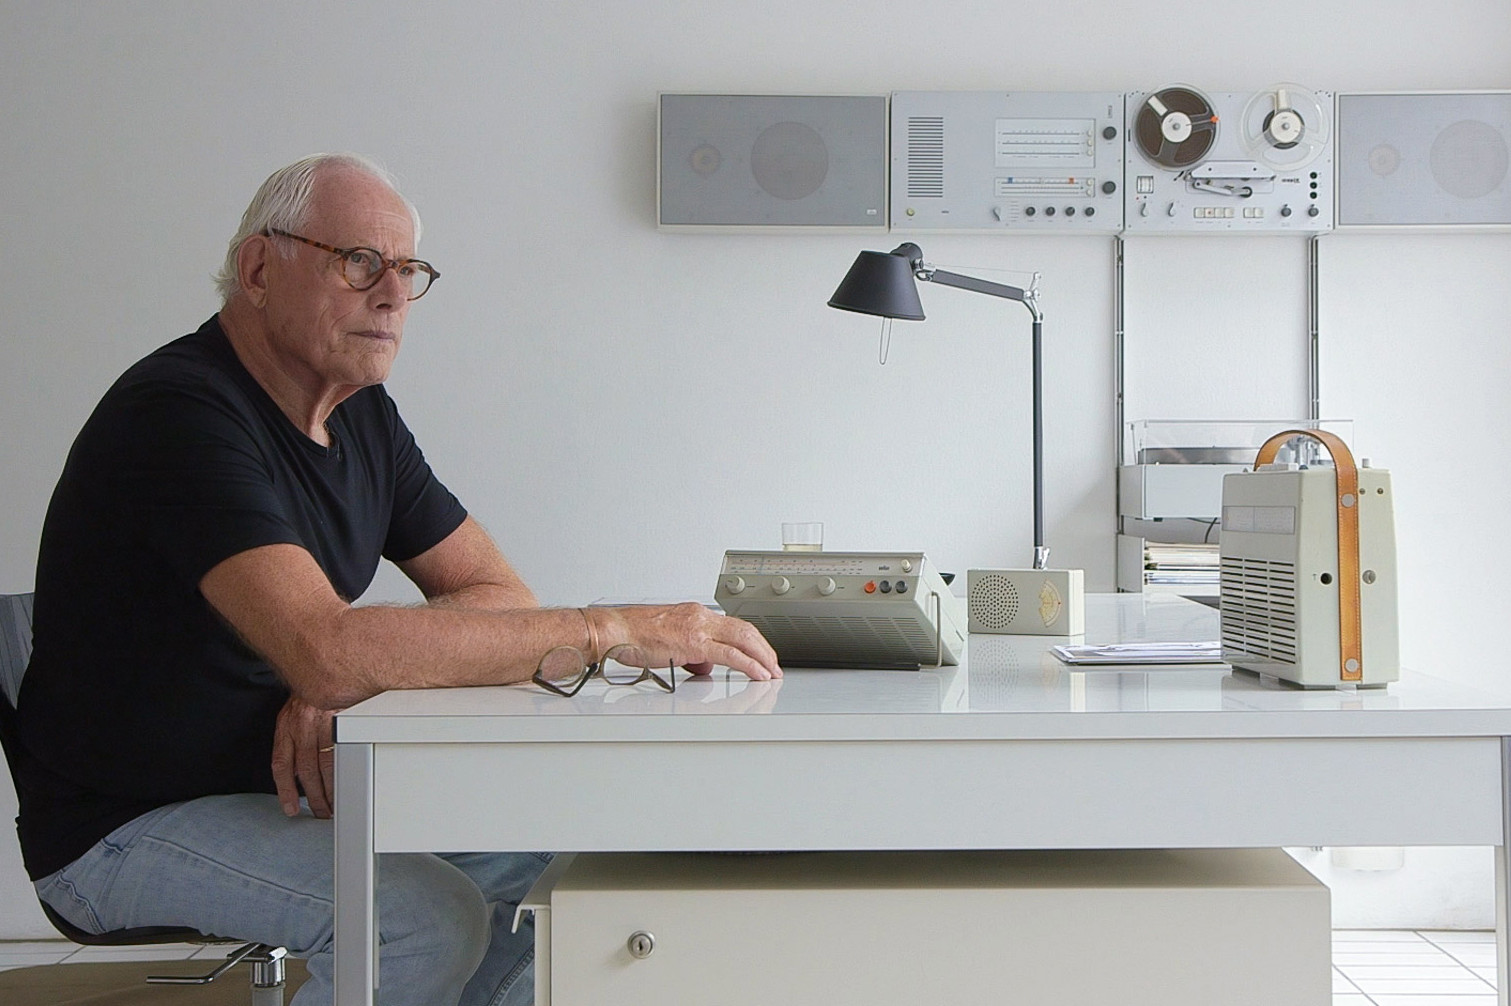 Fenomenální Dieter Rams: k preciznímu designu elektroniky dopomohl i design nábytku